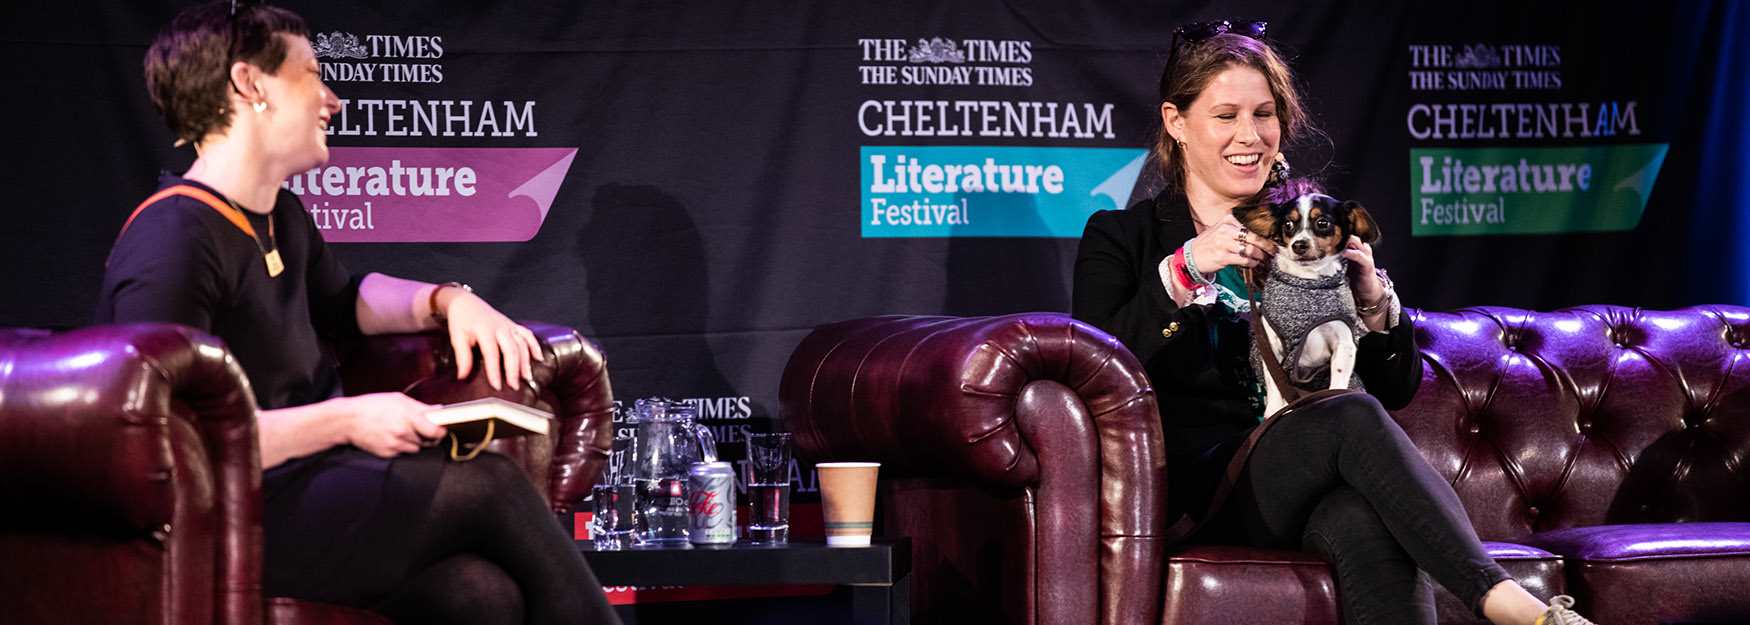 Cheltenham Literary Festival (photo Cheltenham Festivals and Still Moving Media)